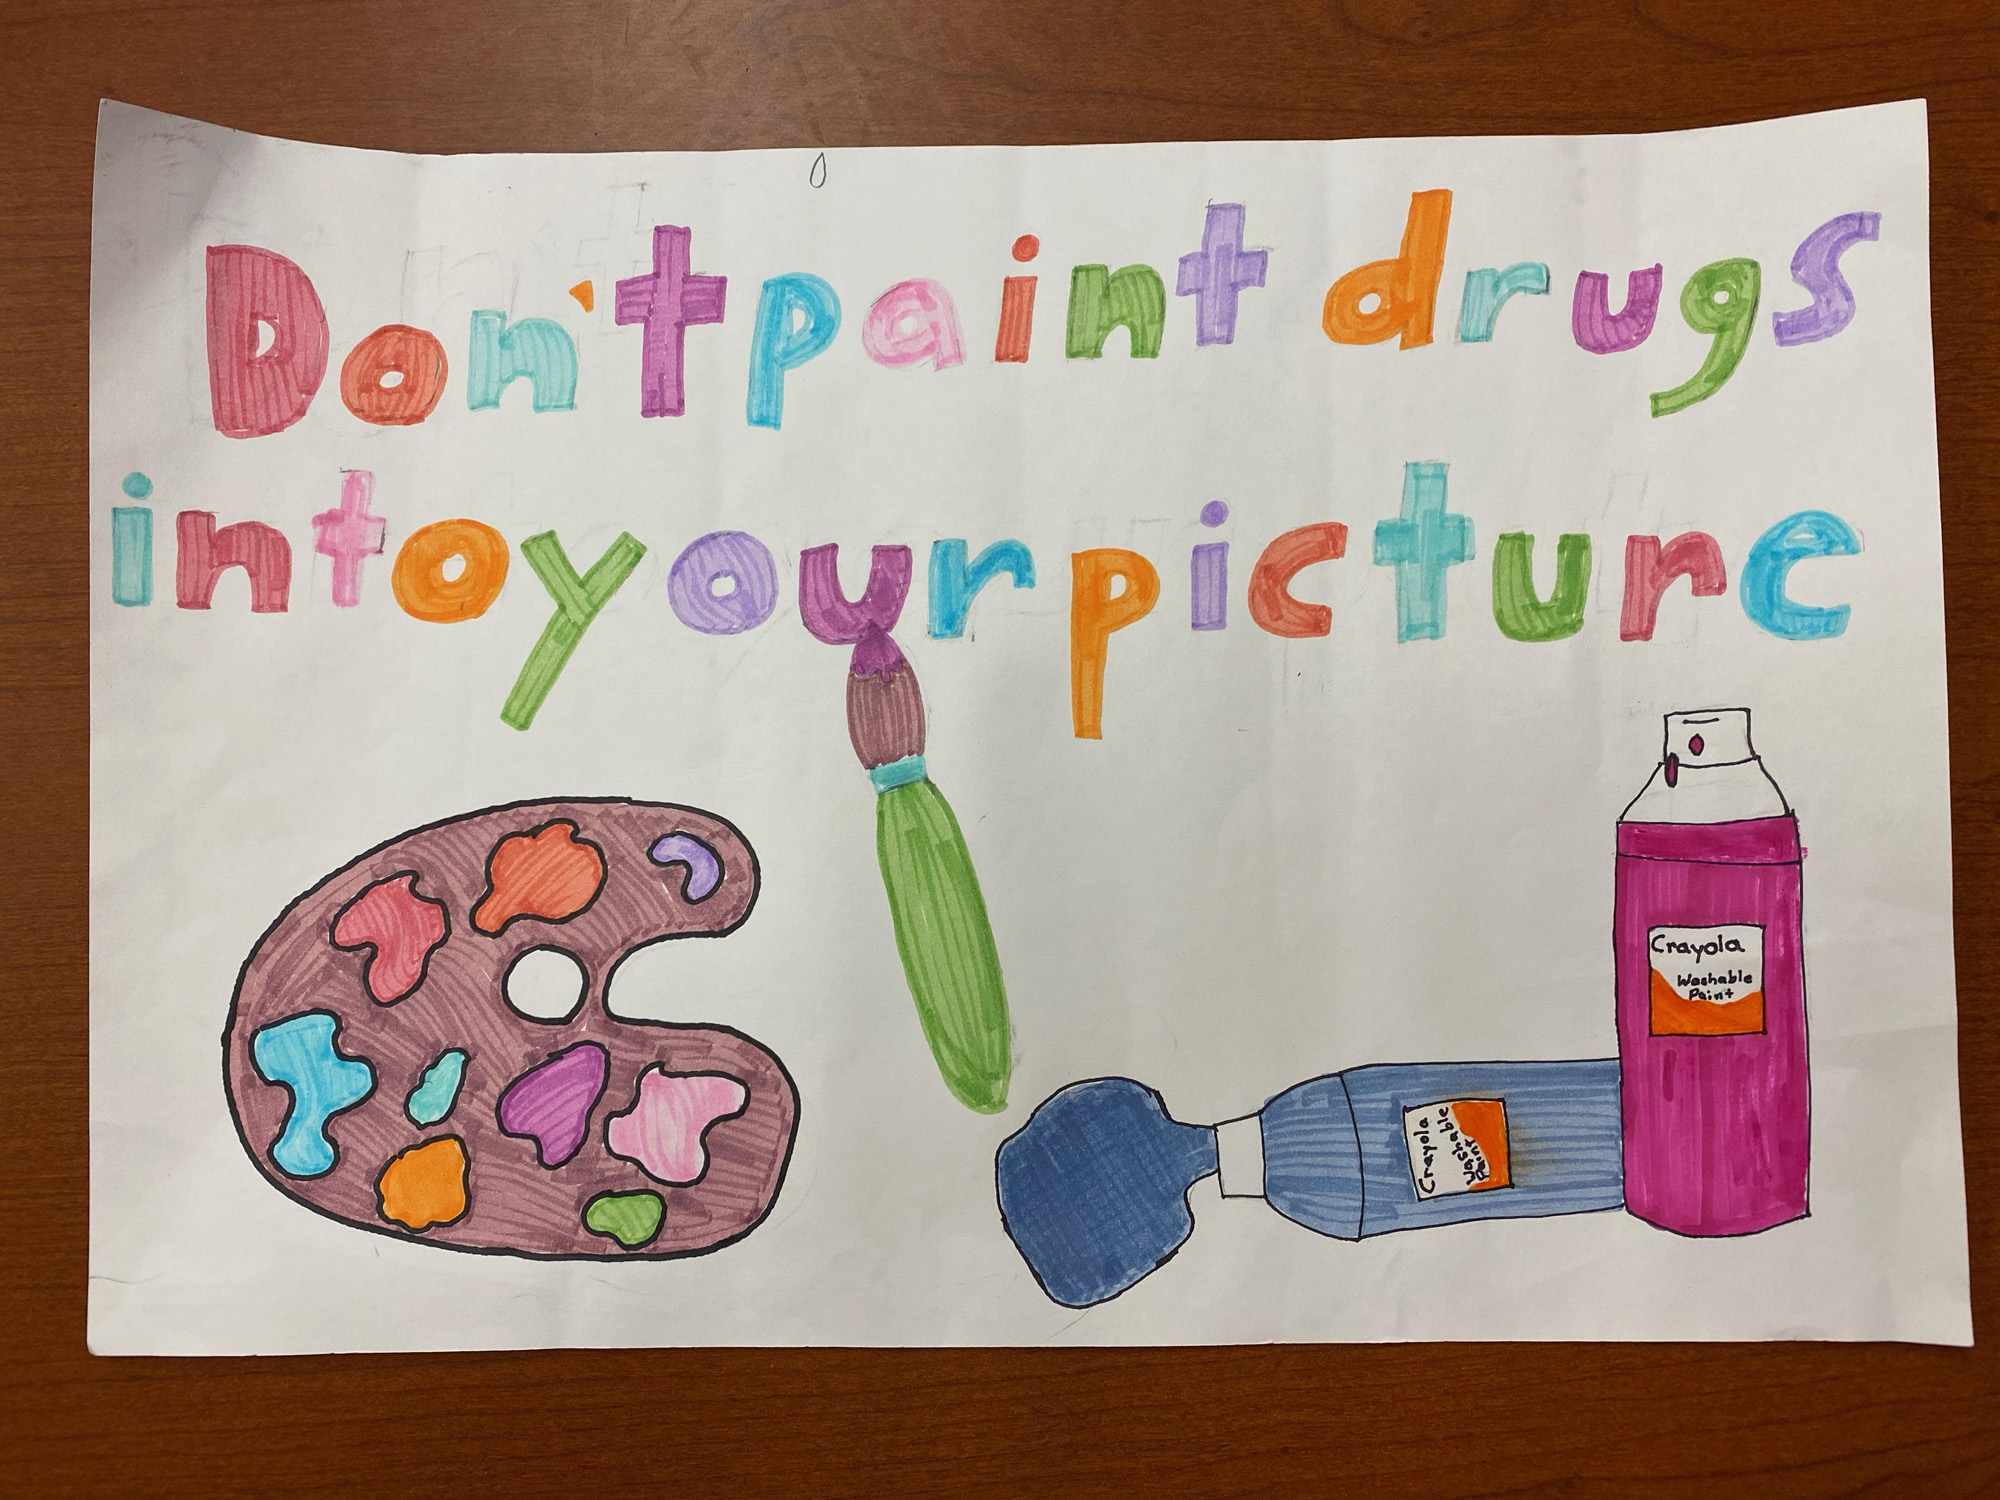 winning drug free posters